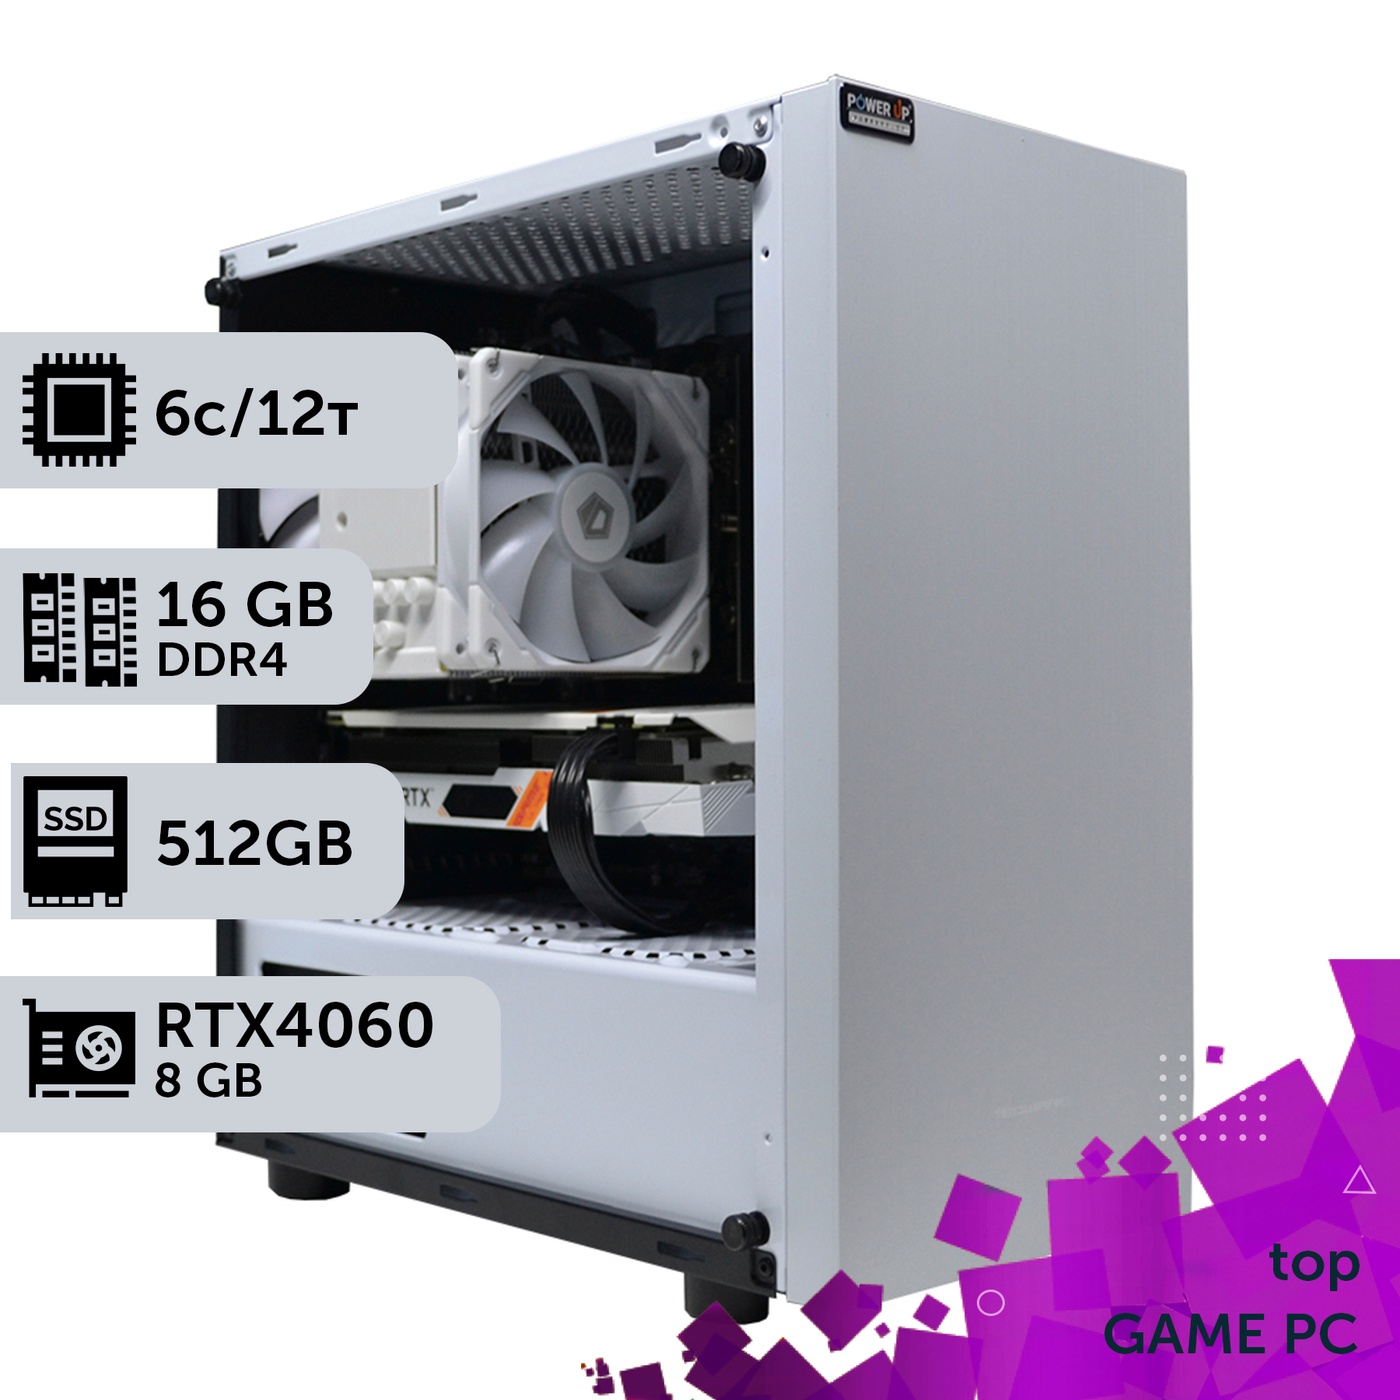 Игровой компьютер GamePC TOP #218 Core i5 10400F/16 GB/SSD 512GB/GeForce RTX 4060 8GB